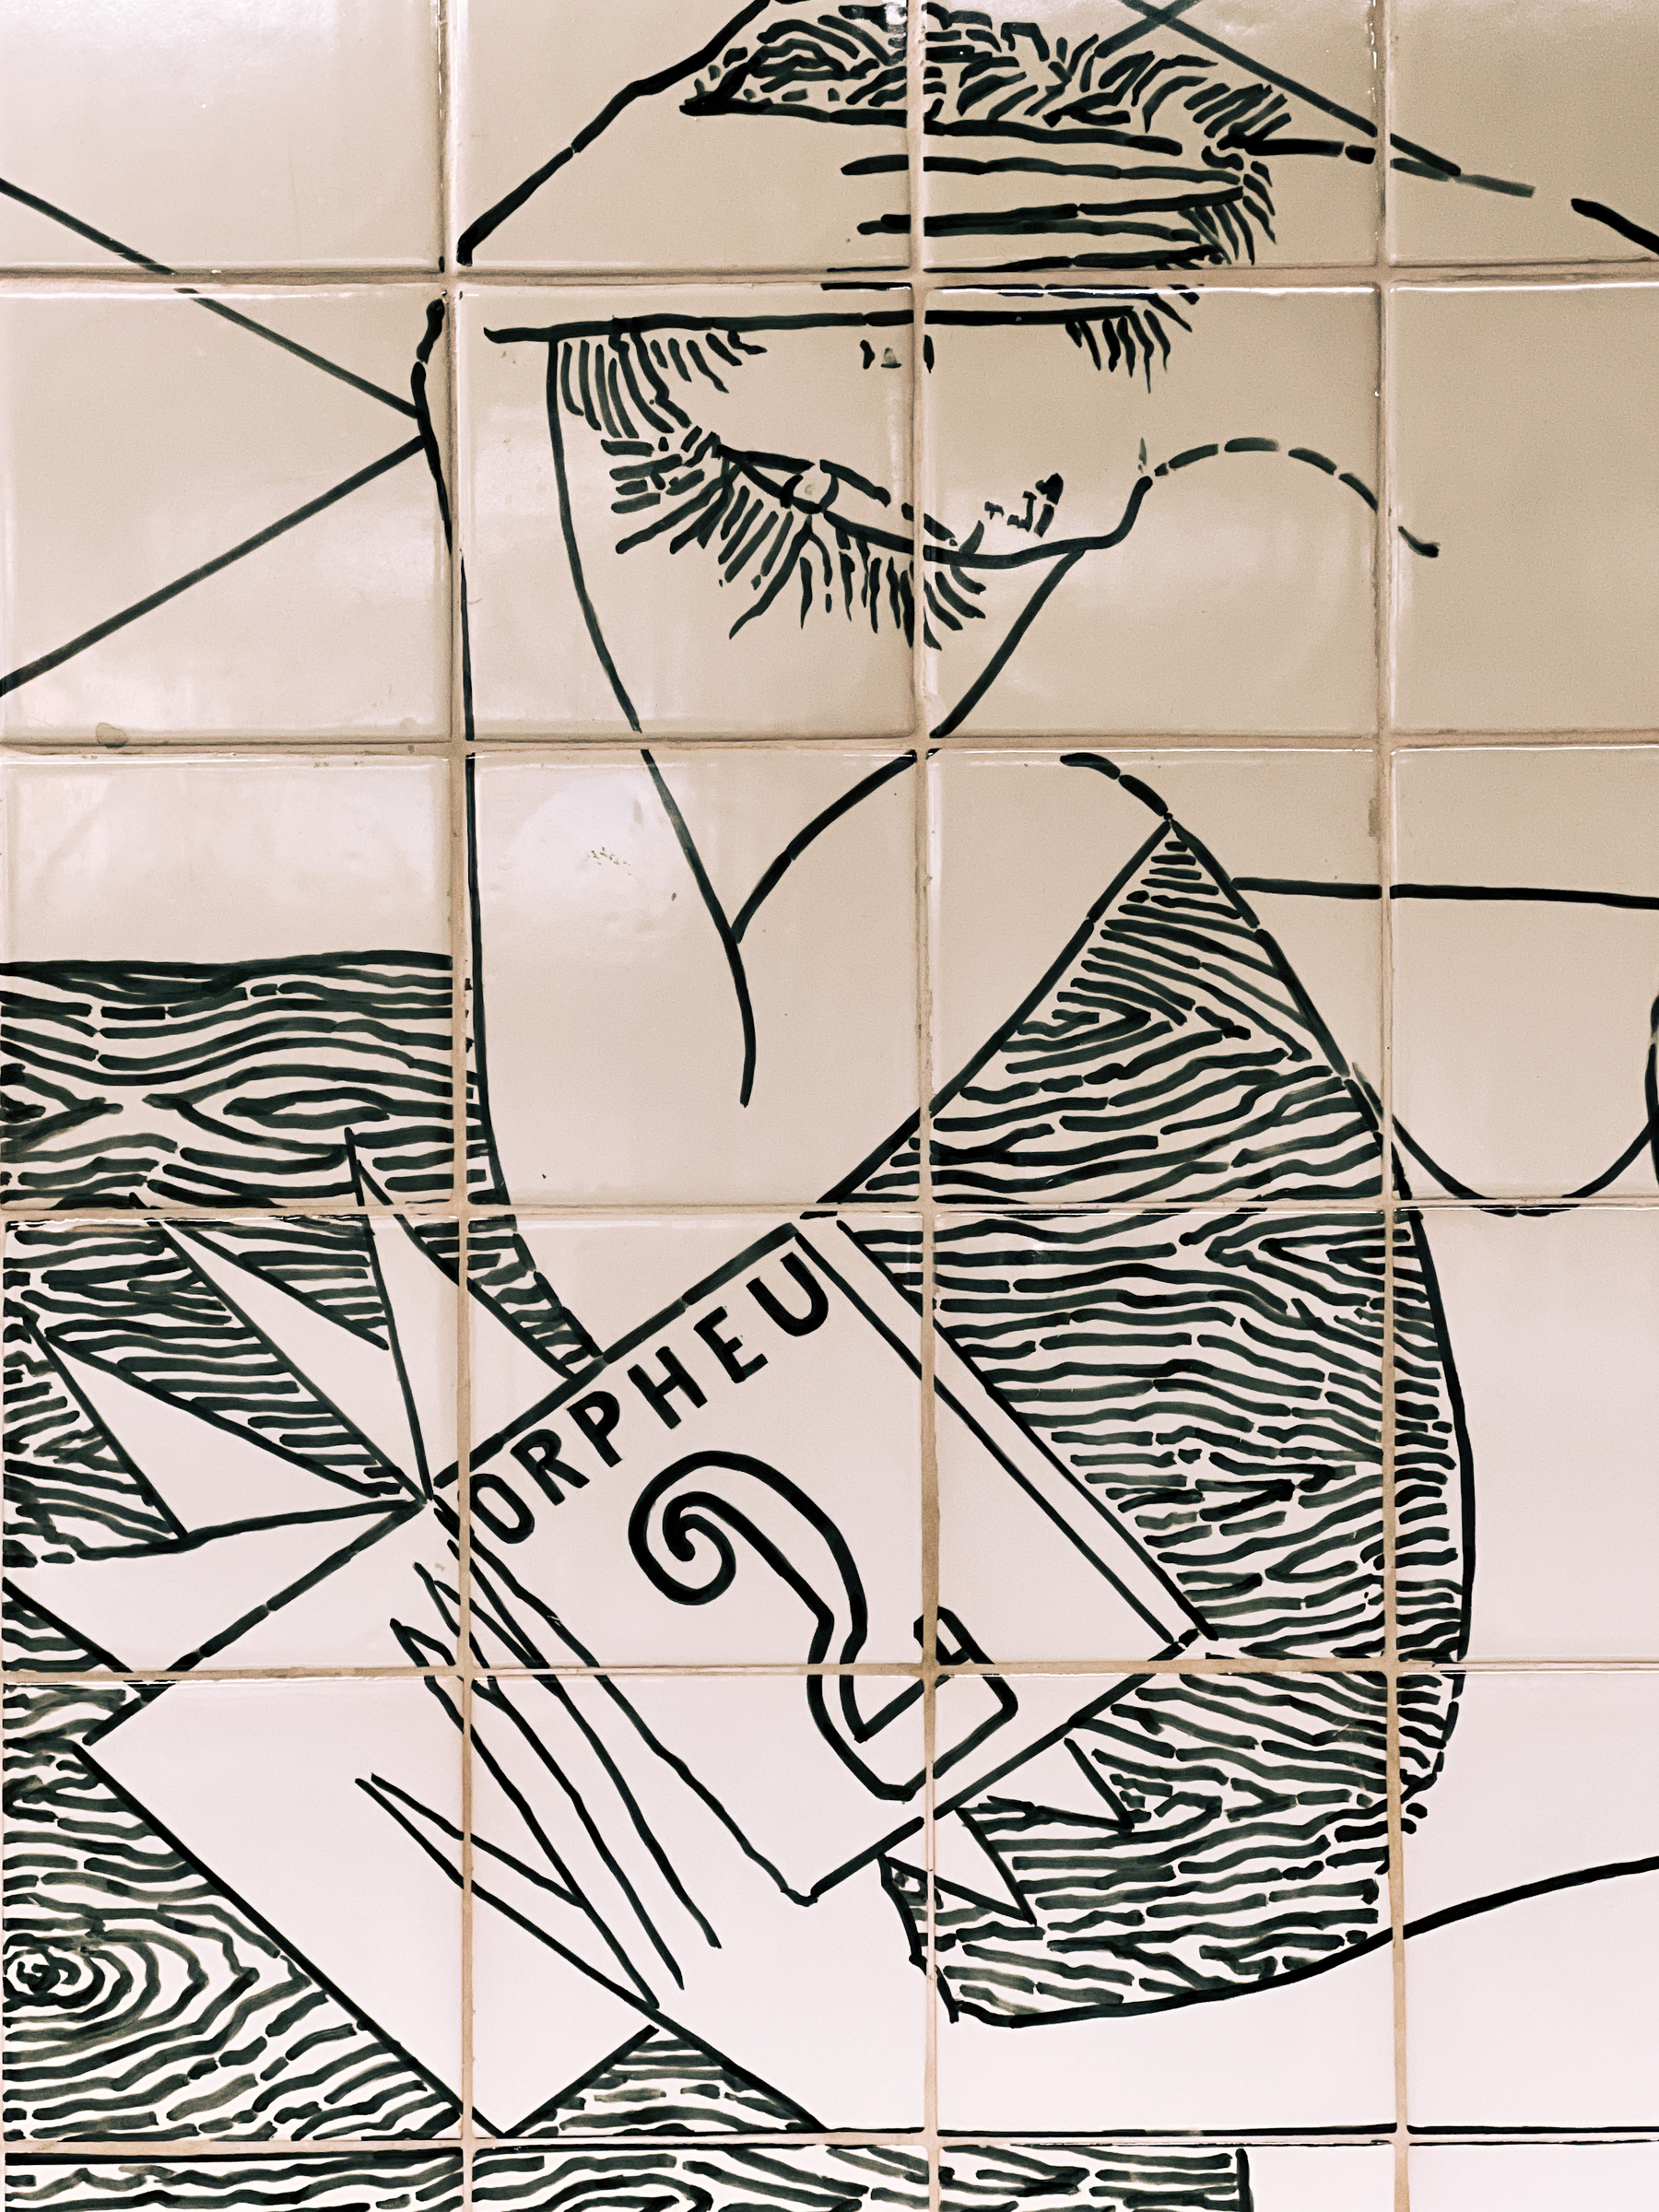 Tile panel. A woman reading “Orpheu 2”. 